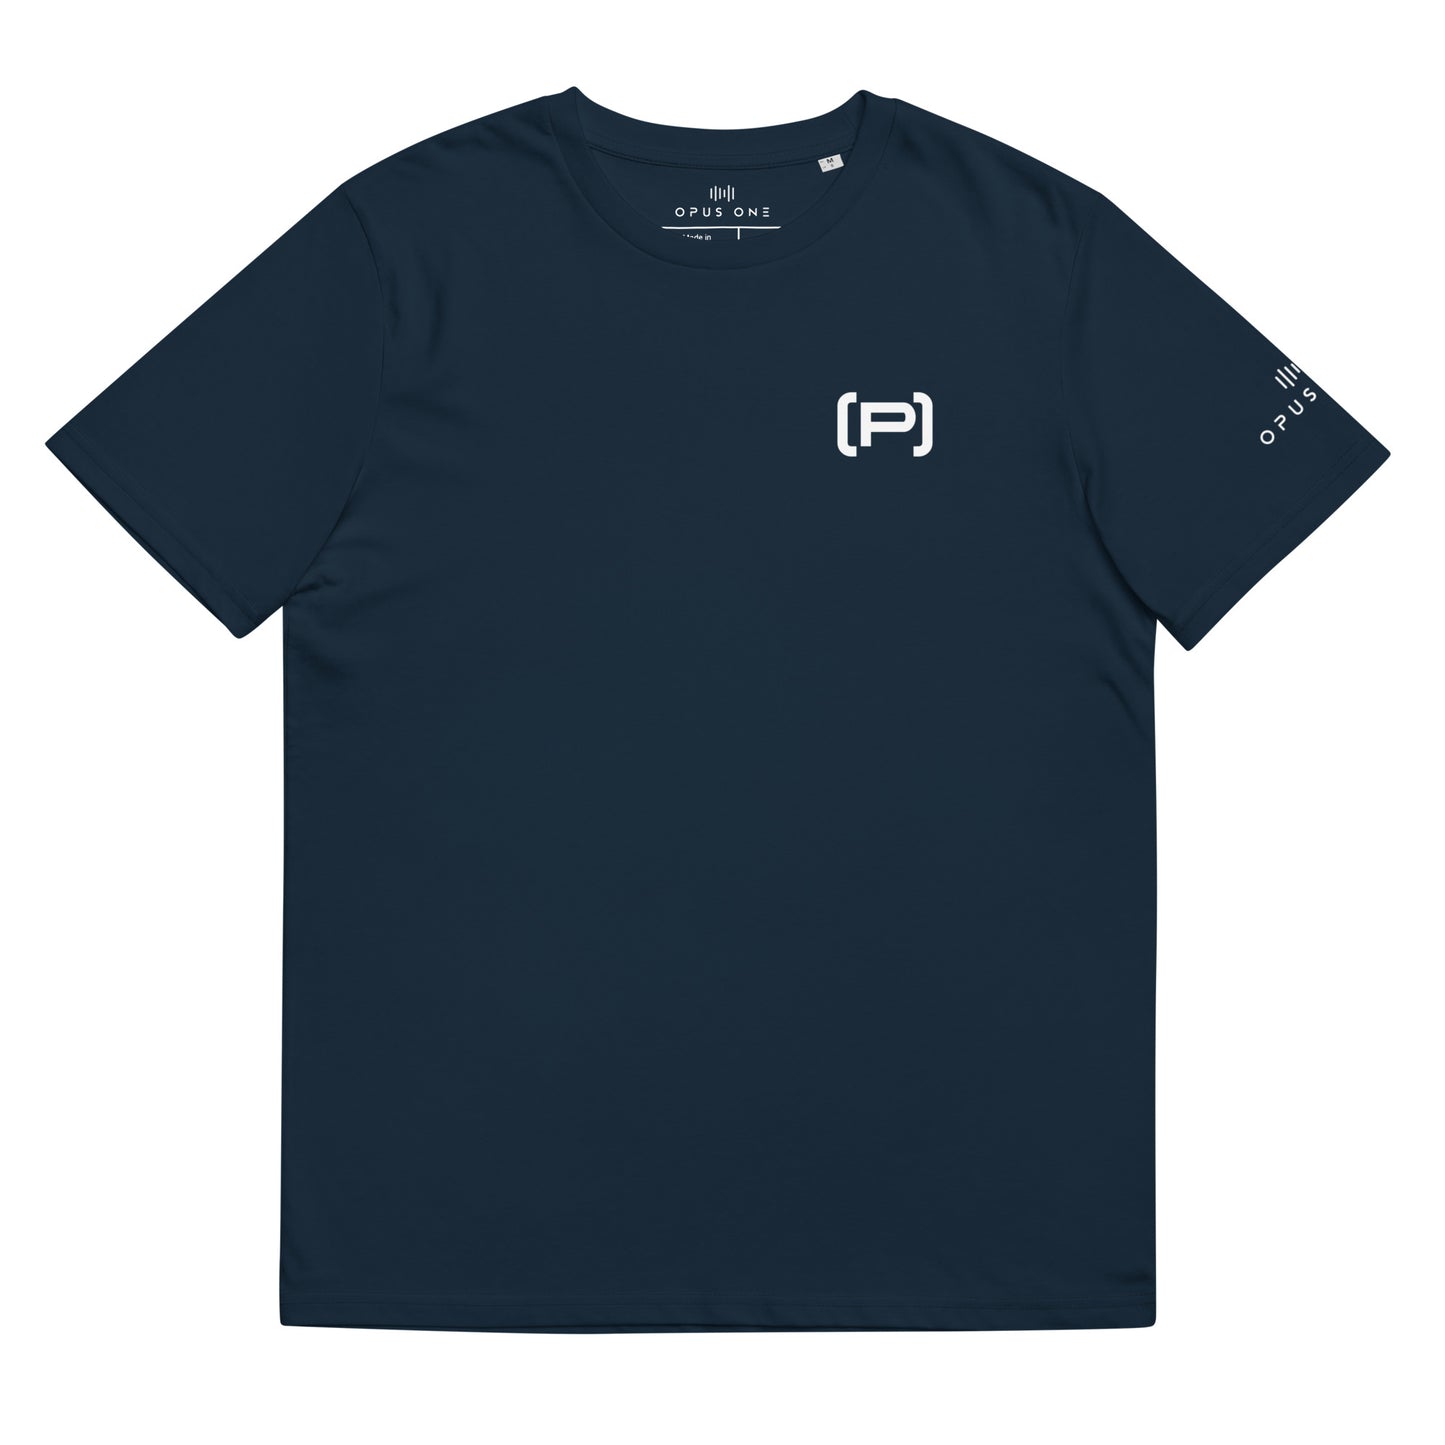 Prototype (v6) Unisex organic cotton t-shirt (White Text)